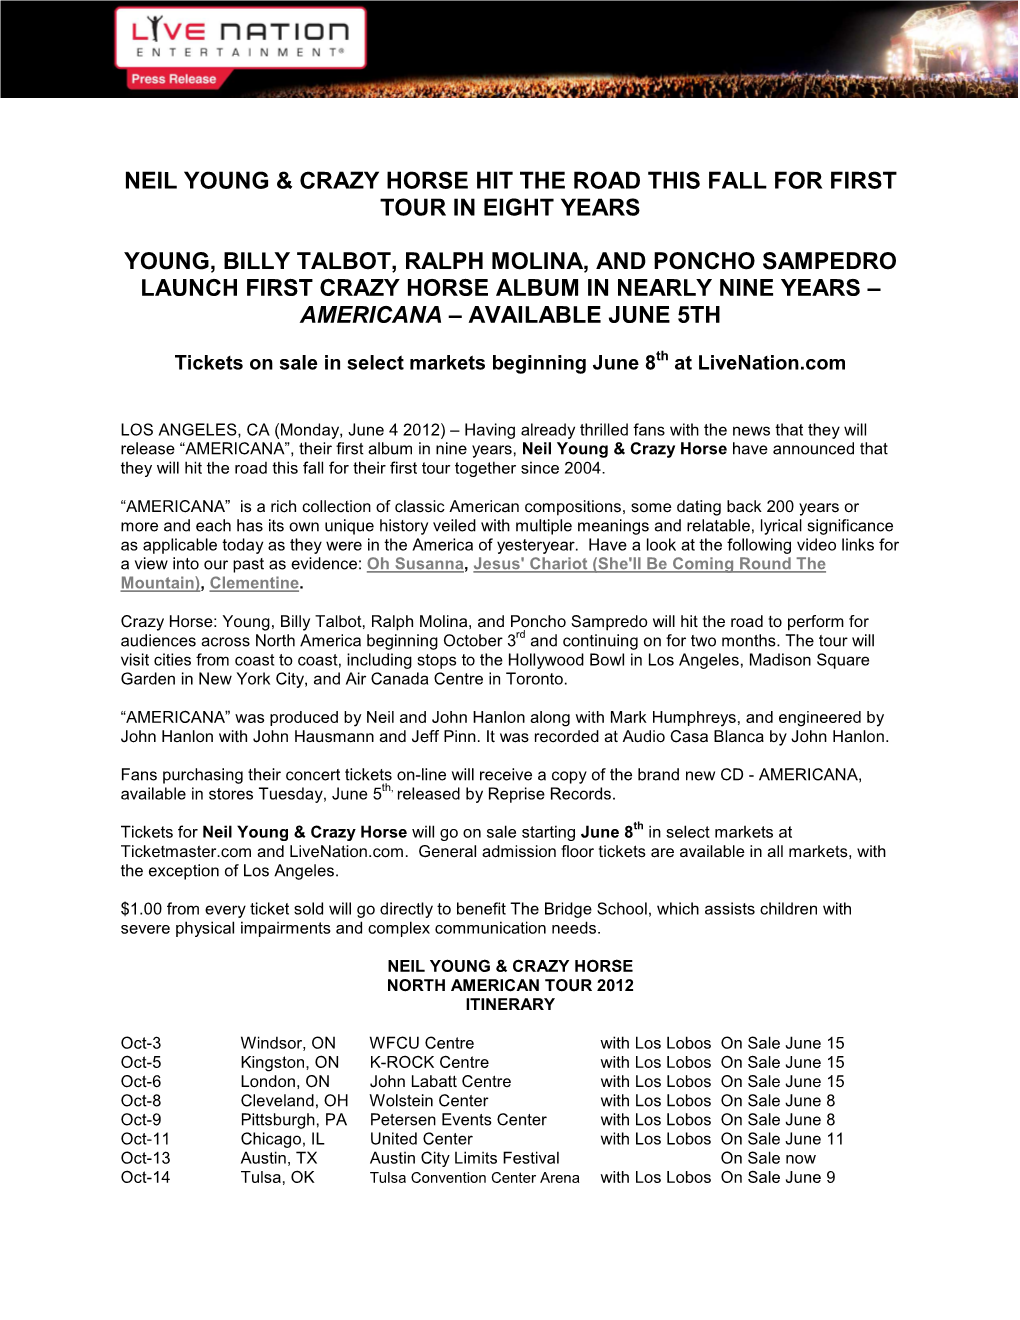 Neil Young Crazy Horse Reunite for 2012 North